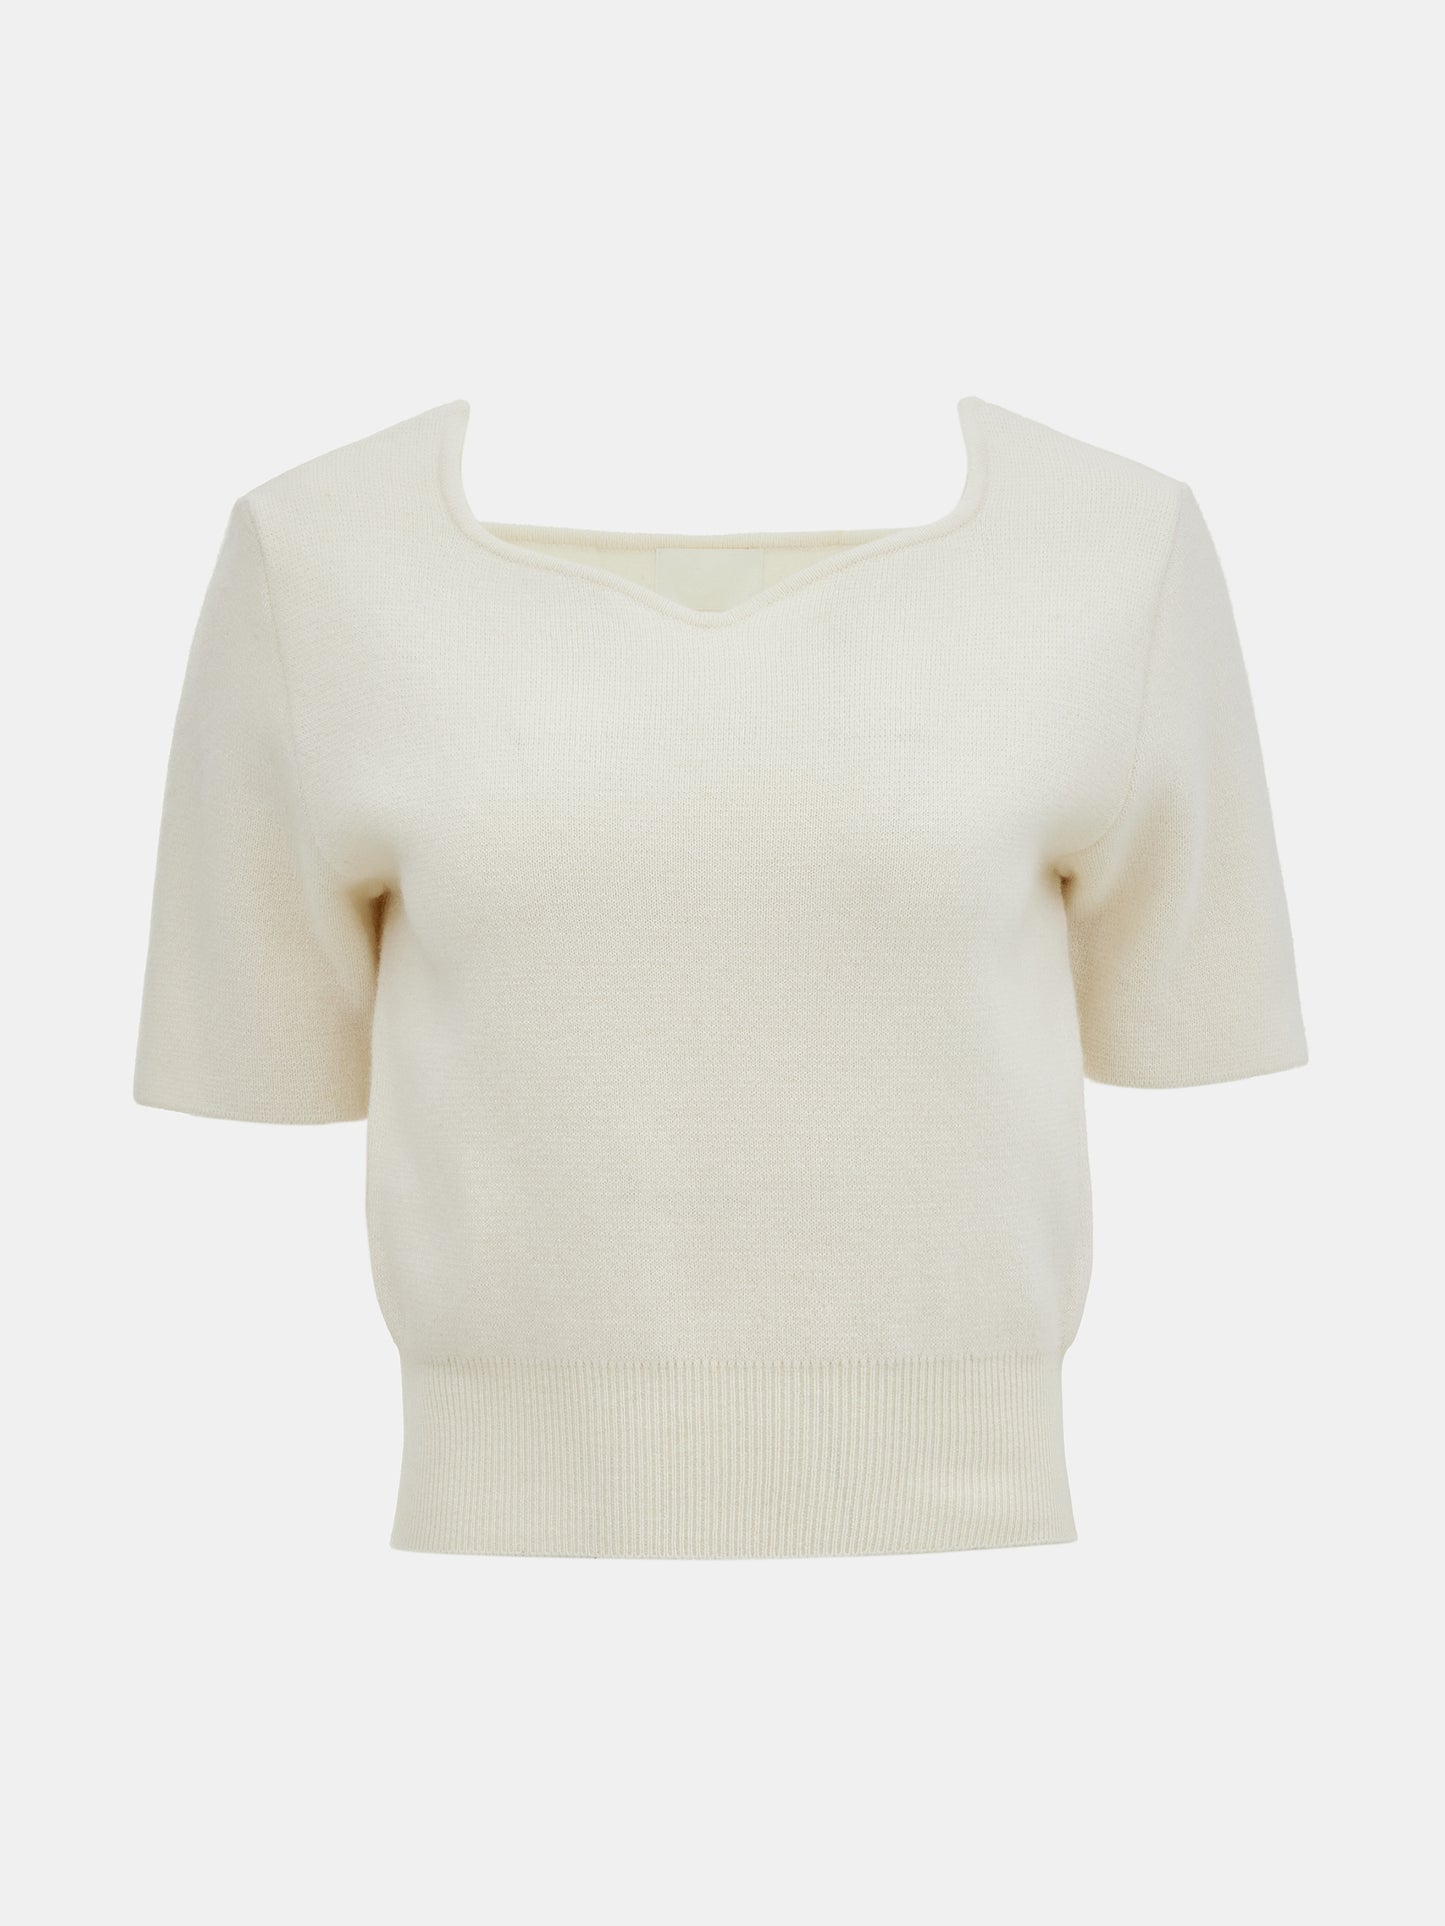 Fonteyn Cashmere Short Sleeve Knit, Cream